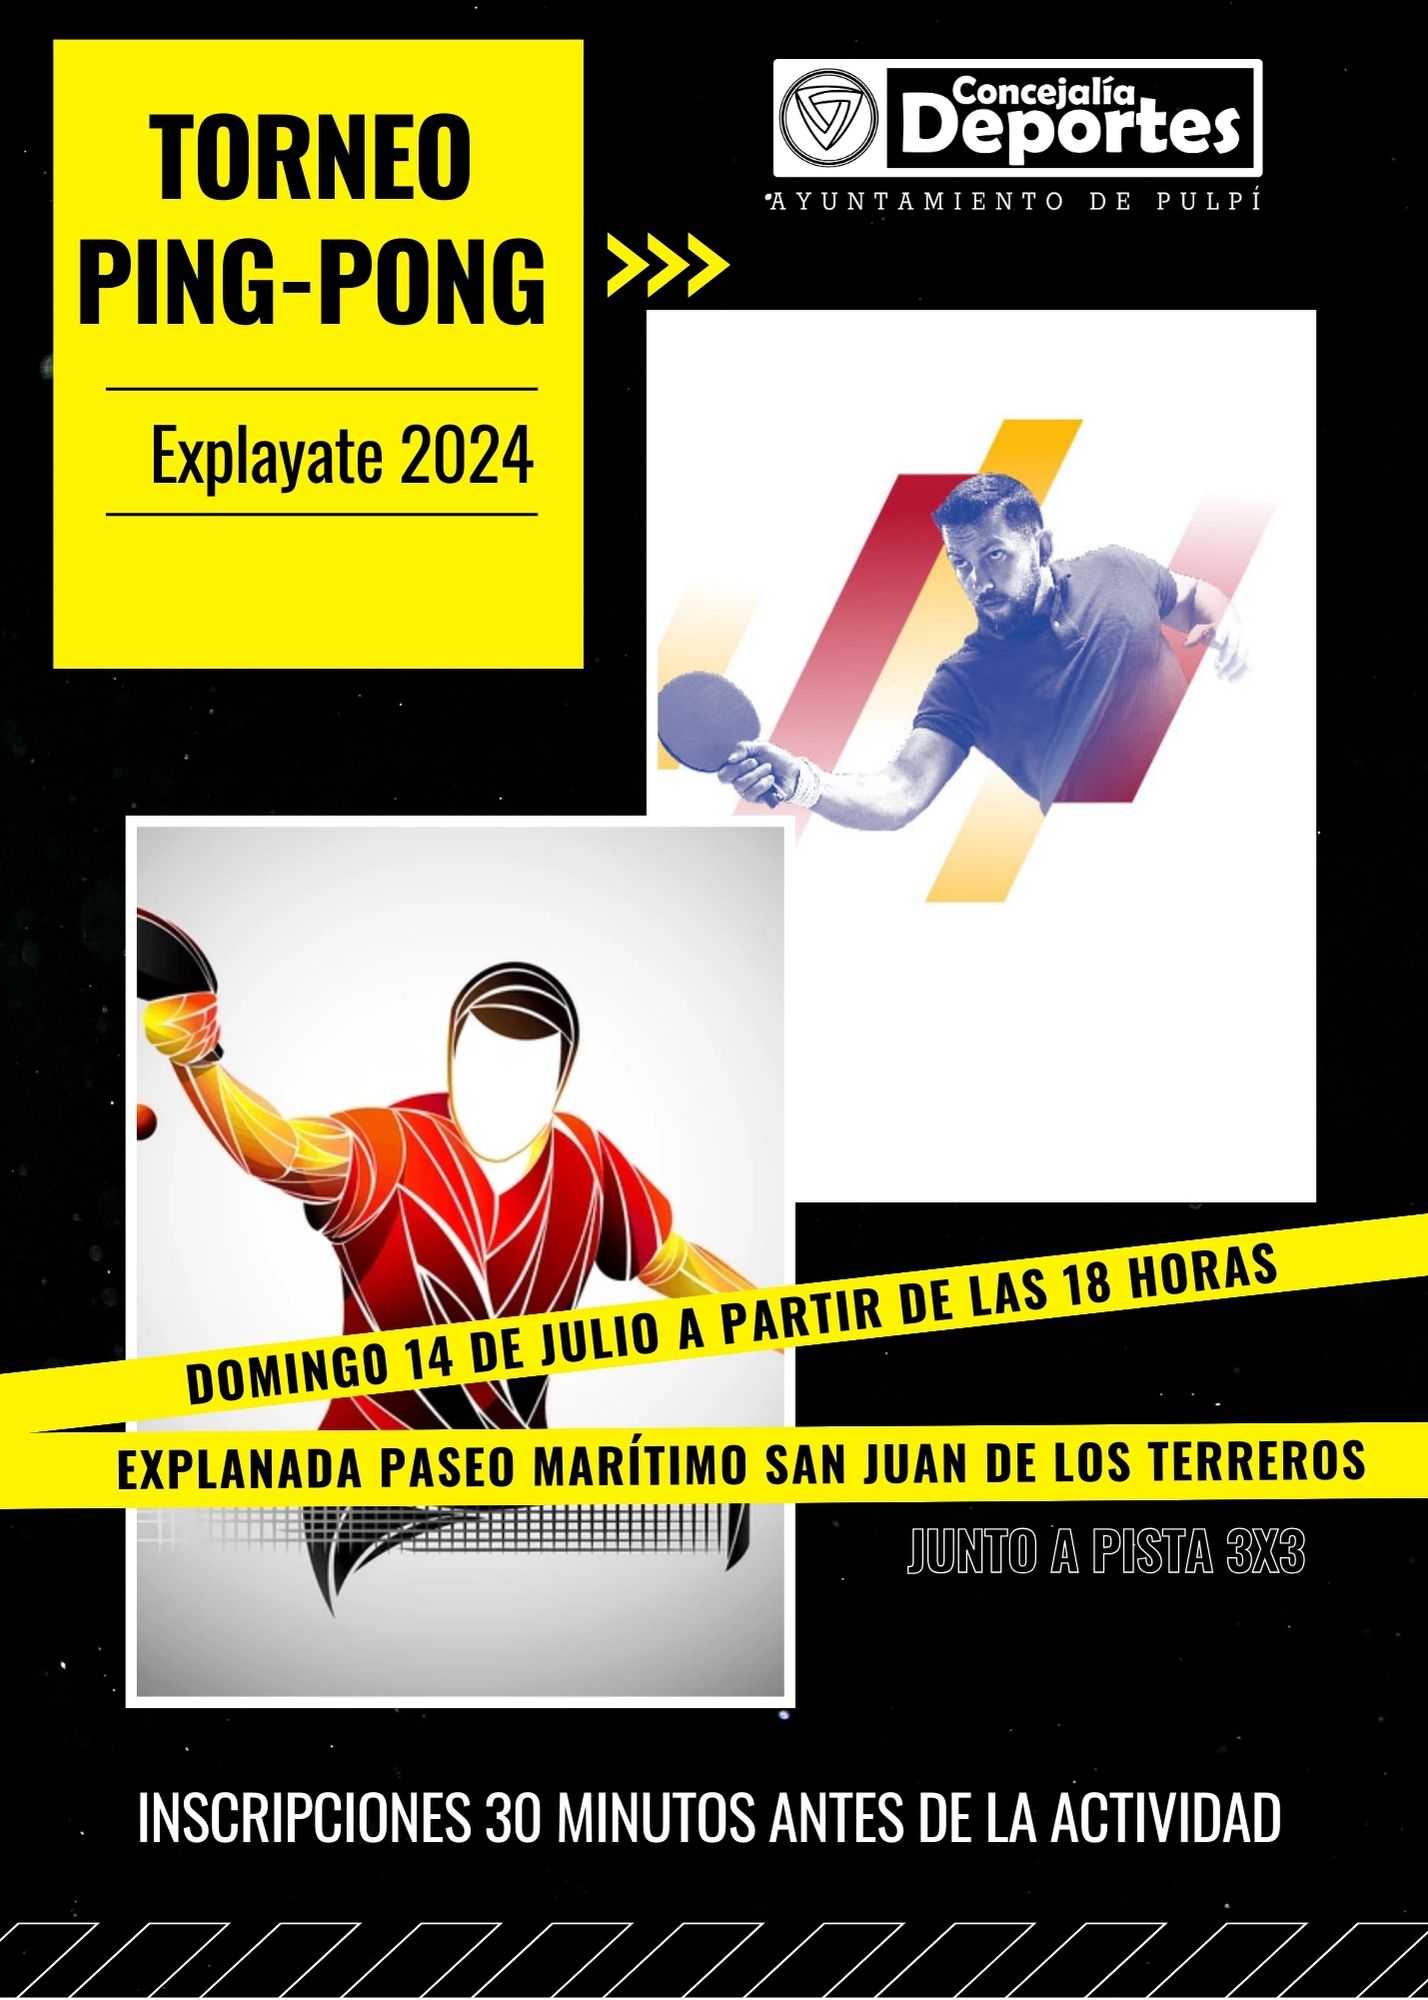 TORNEO DE PING-PONG EXPLAYATE 2024